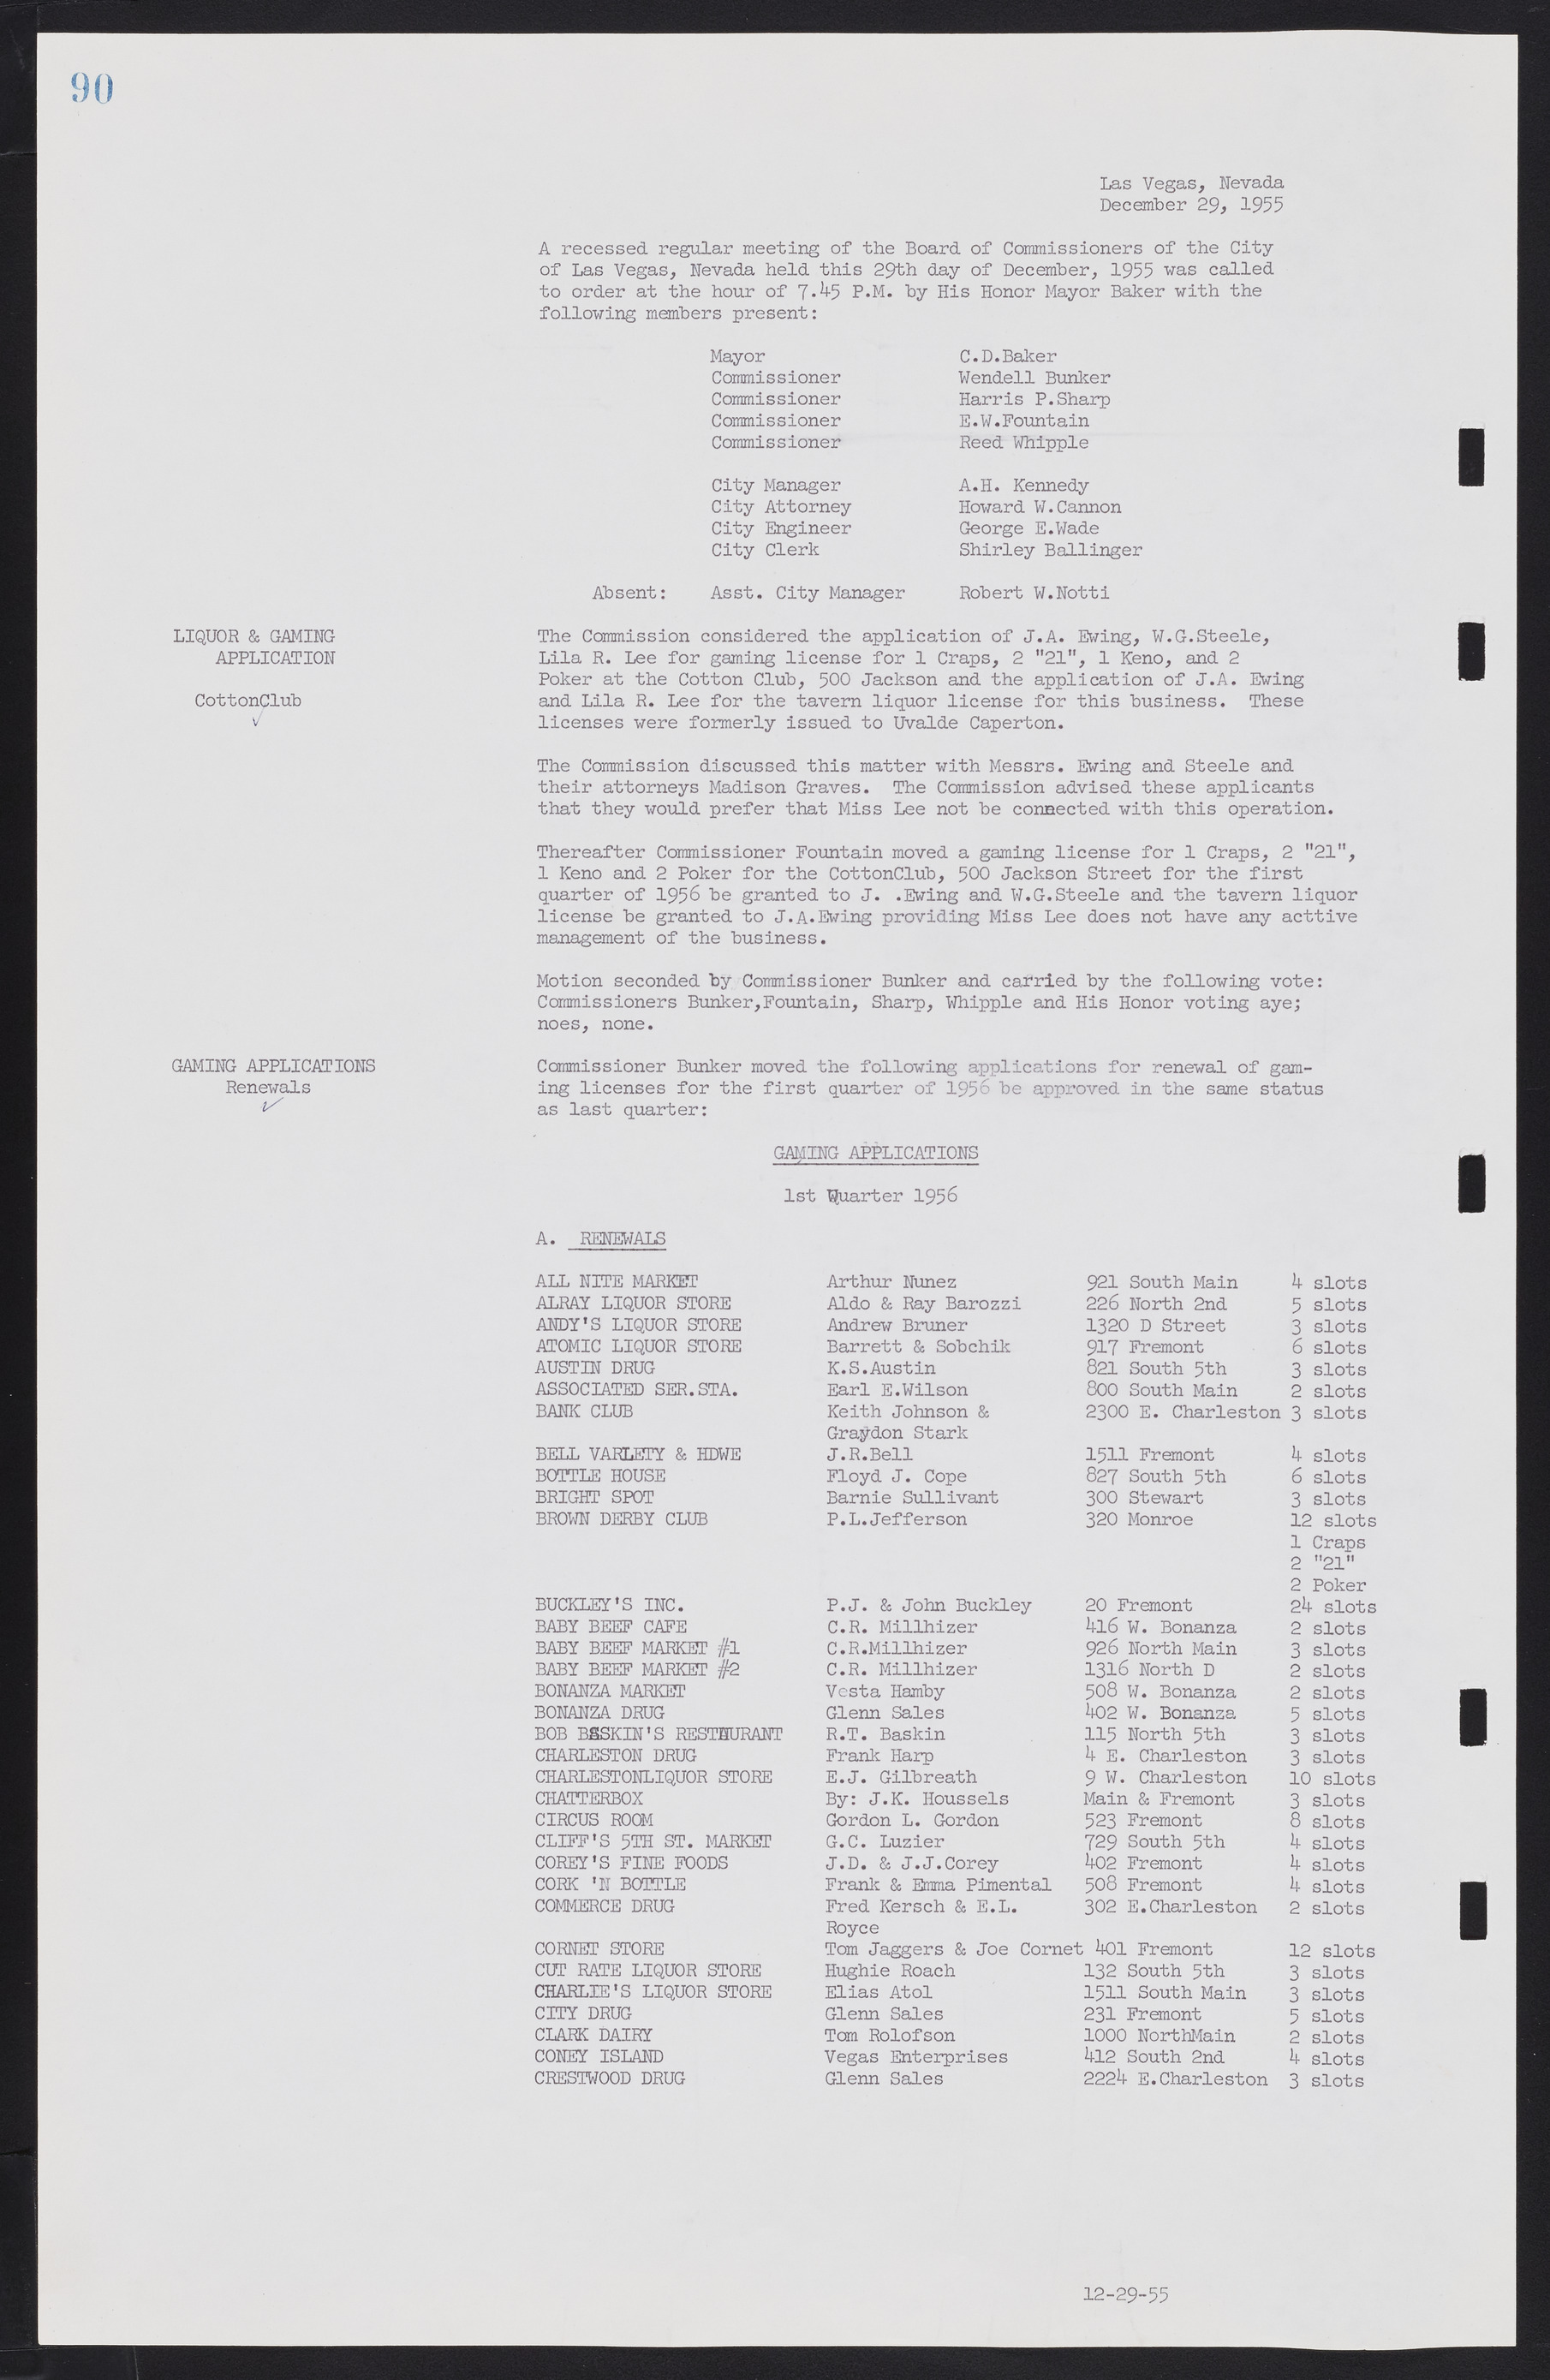 Las Vegas City Commission Minutes, September 21, 1955 to November 20, 1957, lvc000010-100